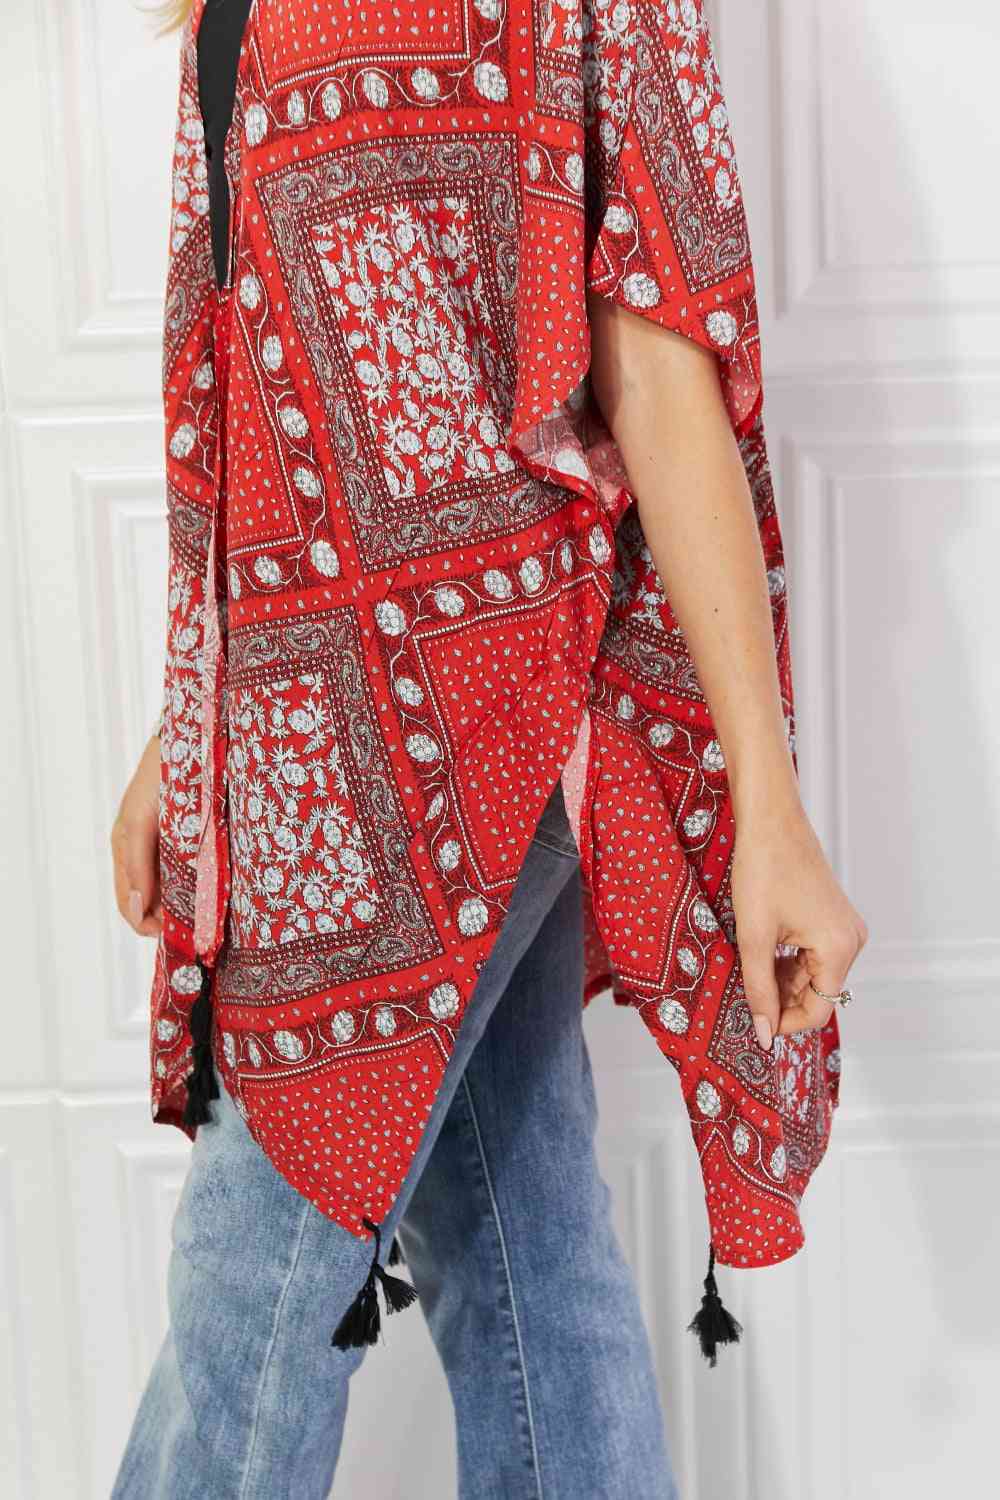 Justin Taylor Paisley Design Kimono in Red  Krazy Heart Designs Boutique   